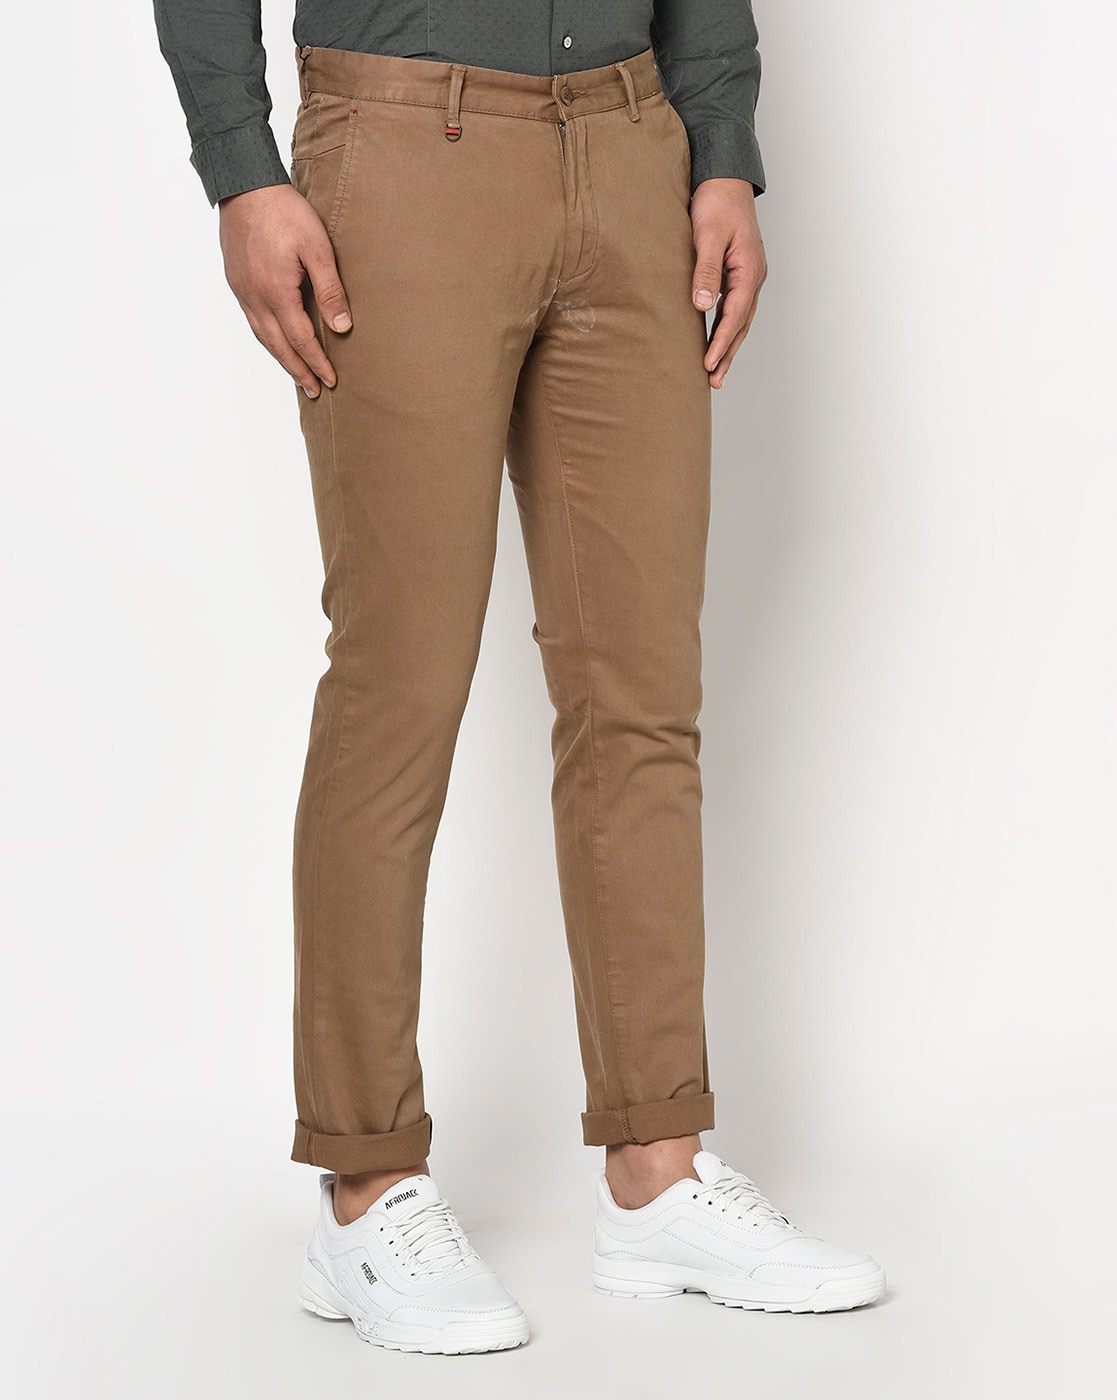 brown #pants #men #outfit #street #brownpantsmenoutfitstreet | Indie fashion  men, Mens outfits, Brown pants men